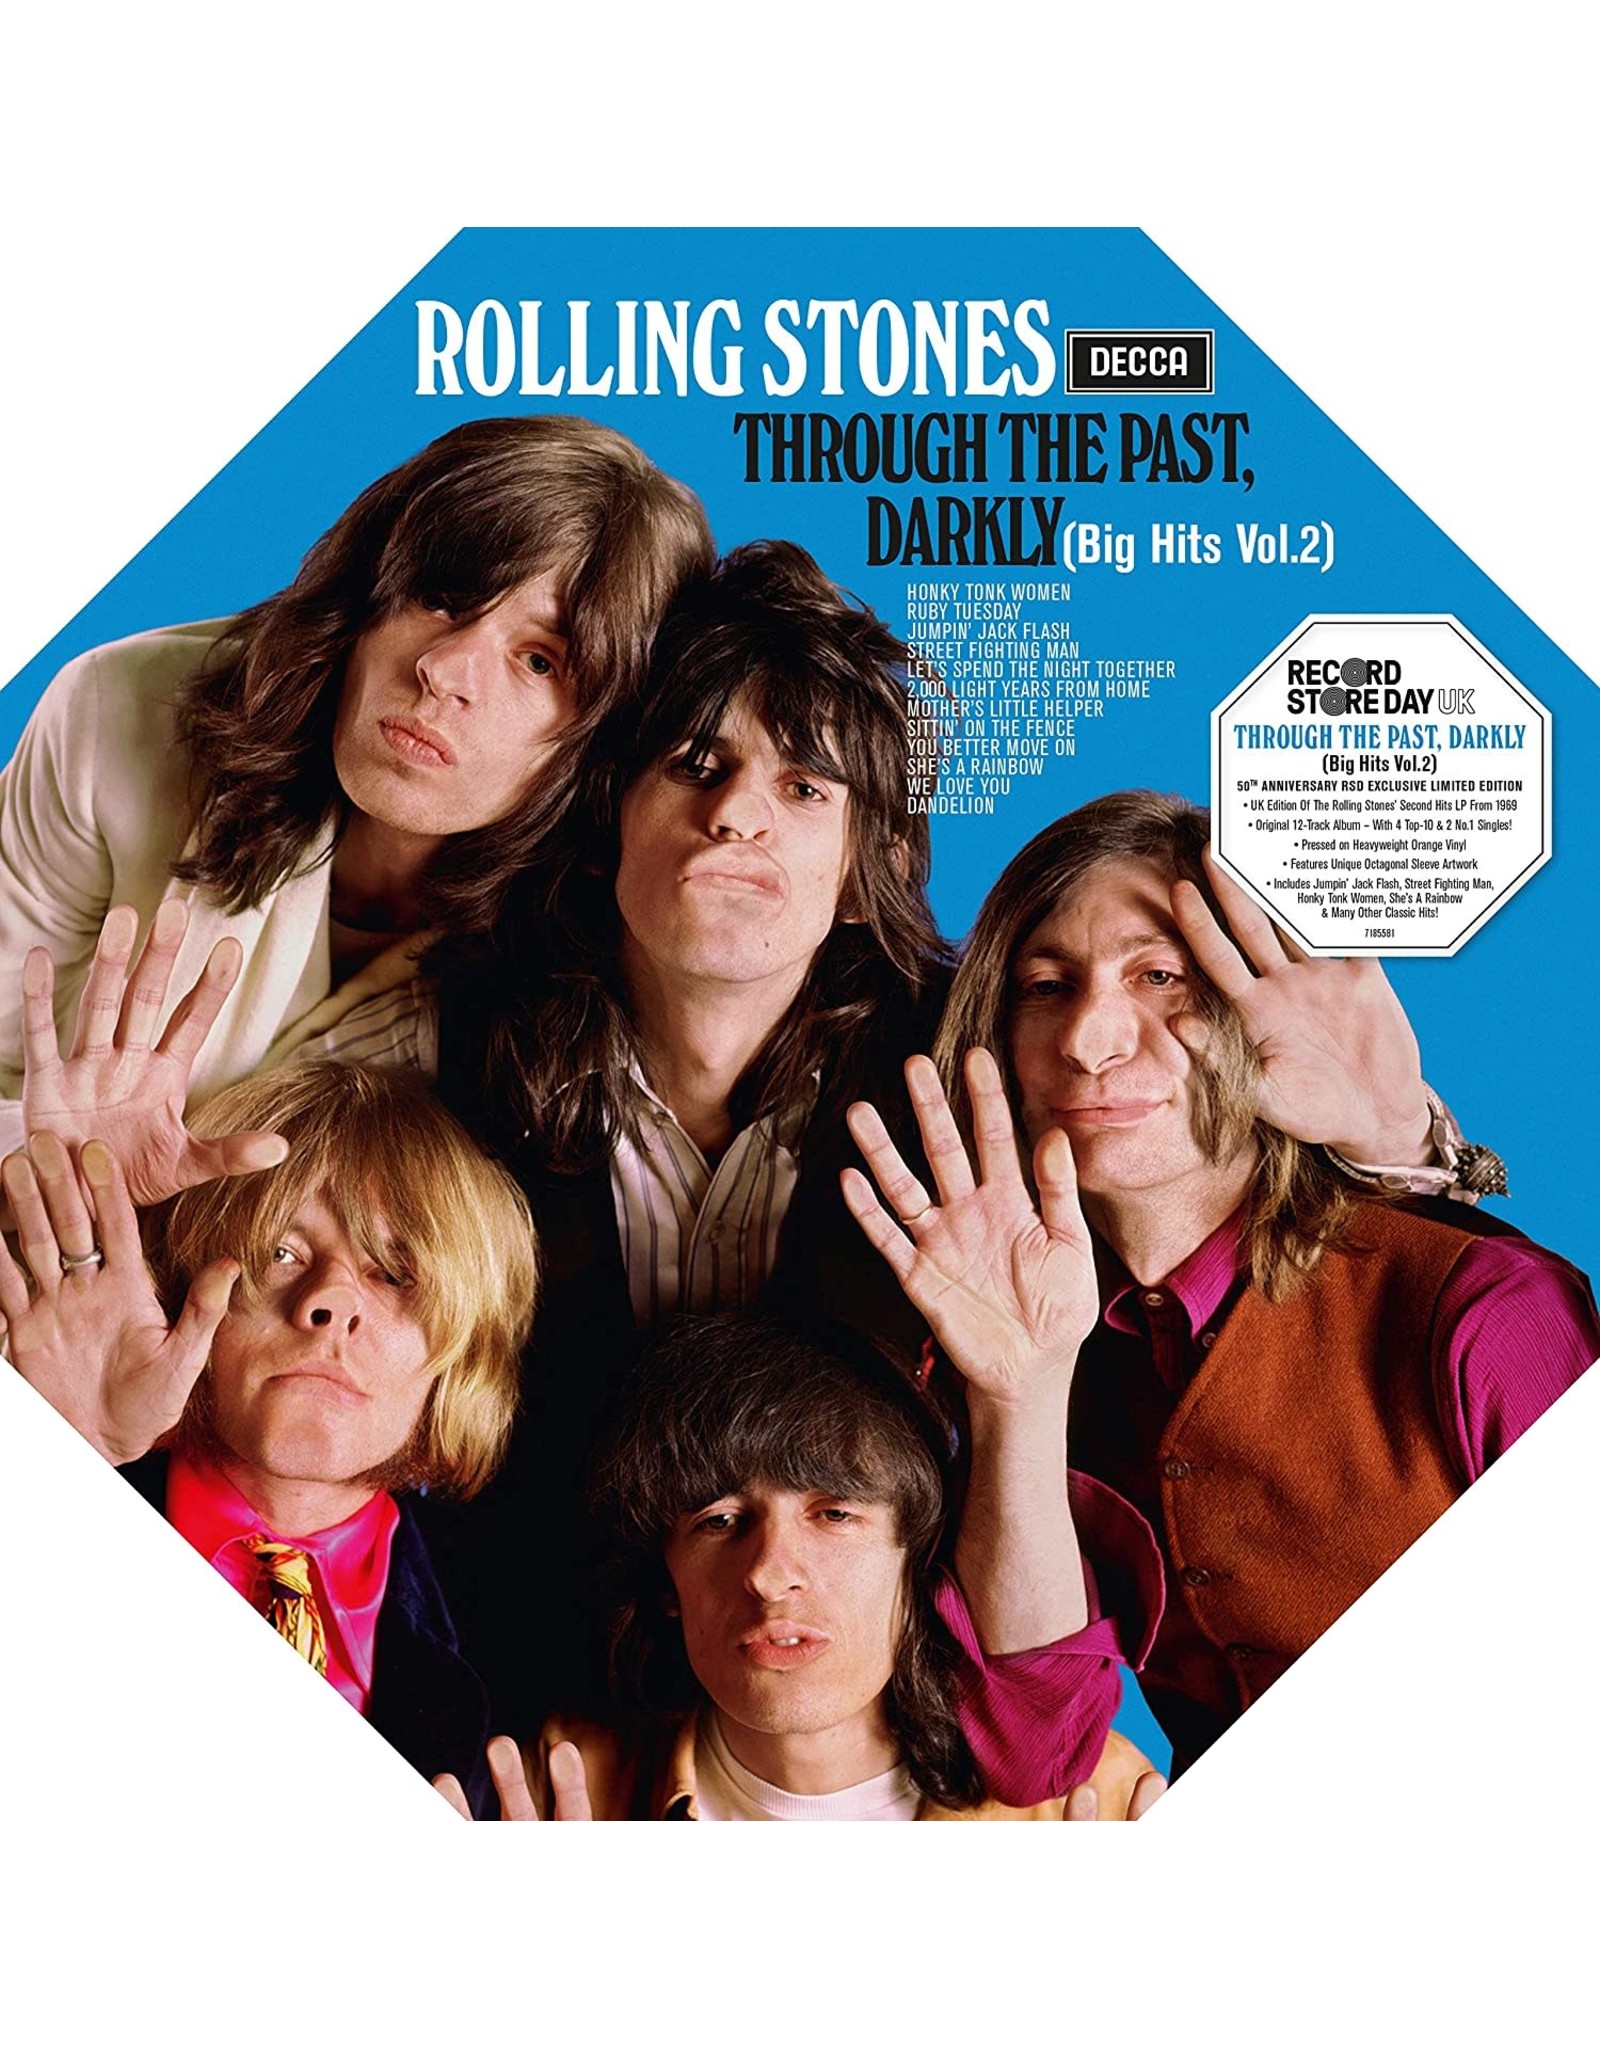 Rolling Stones - Through The Past Darkly (Big Hits Vol.2) [Orange Vinyl]